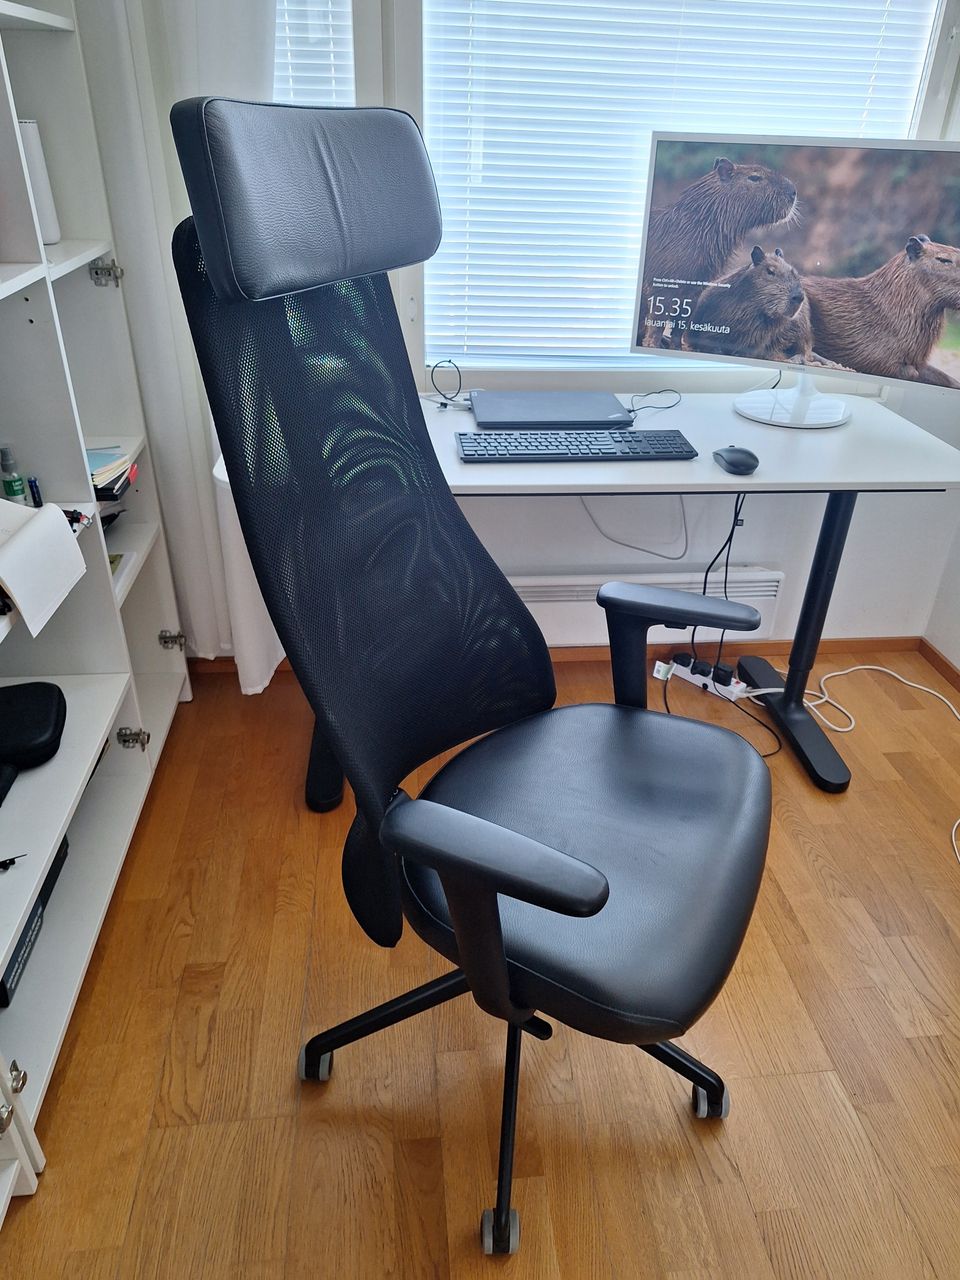 Ergonomic chair, IKEA